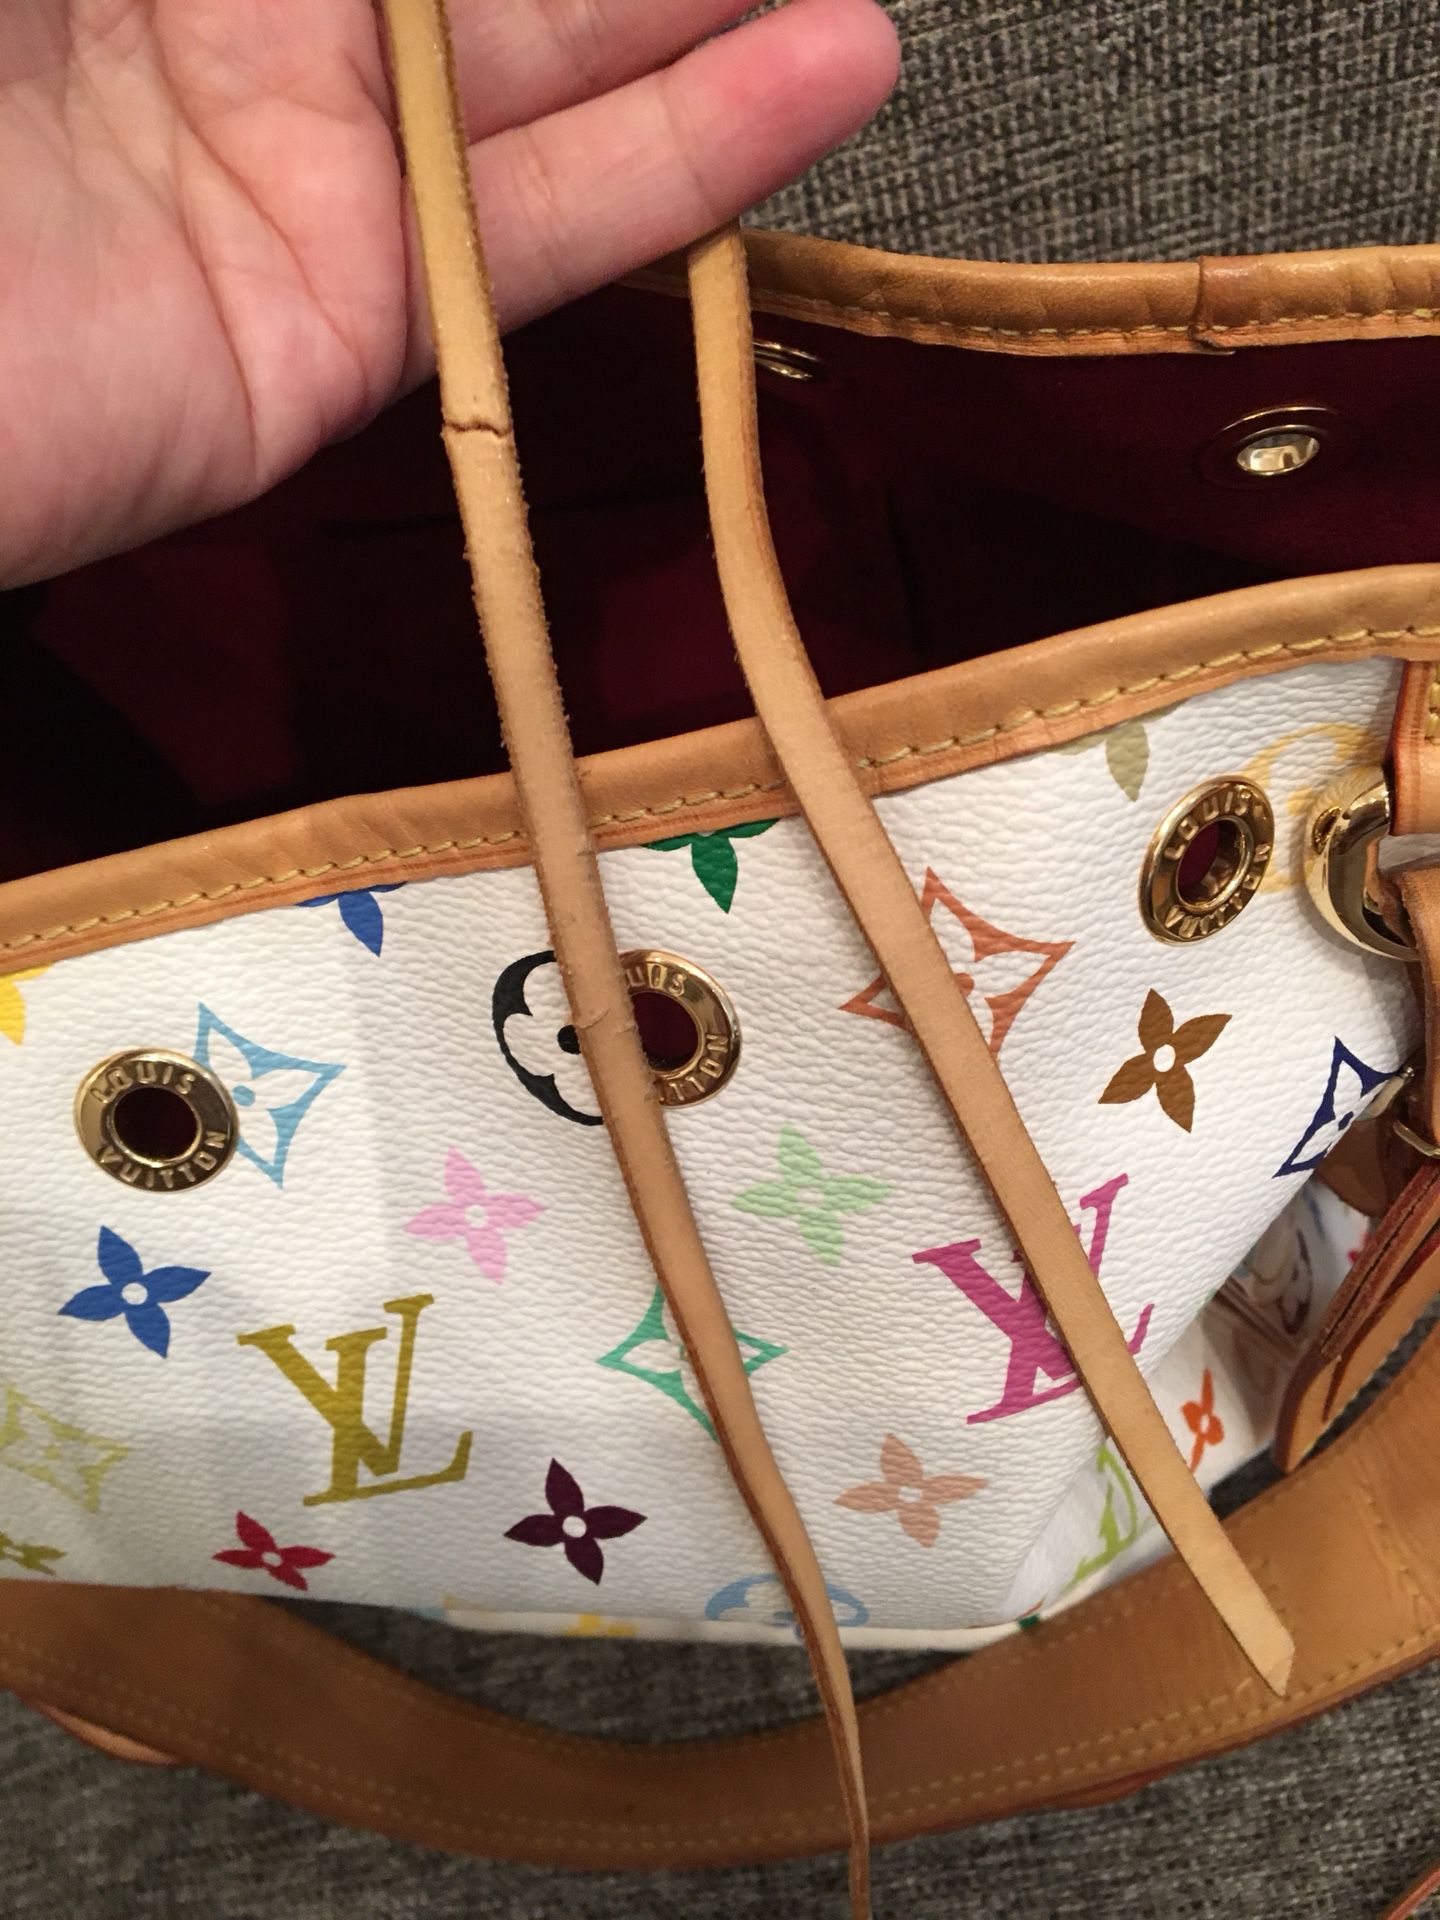 Louis Vuitton Petit Noe Bag for Sale in Boerne, TX - OfferUp